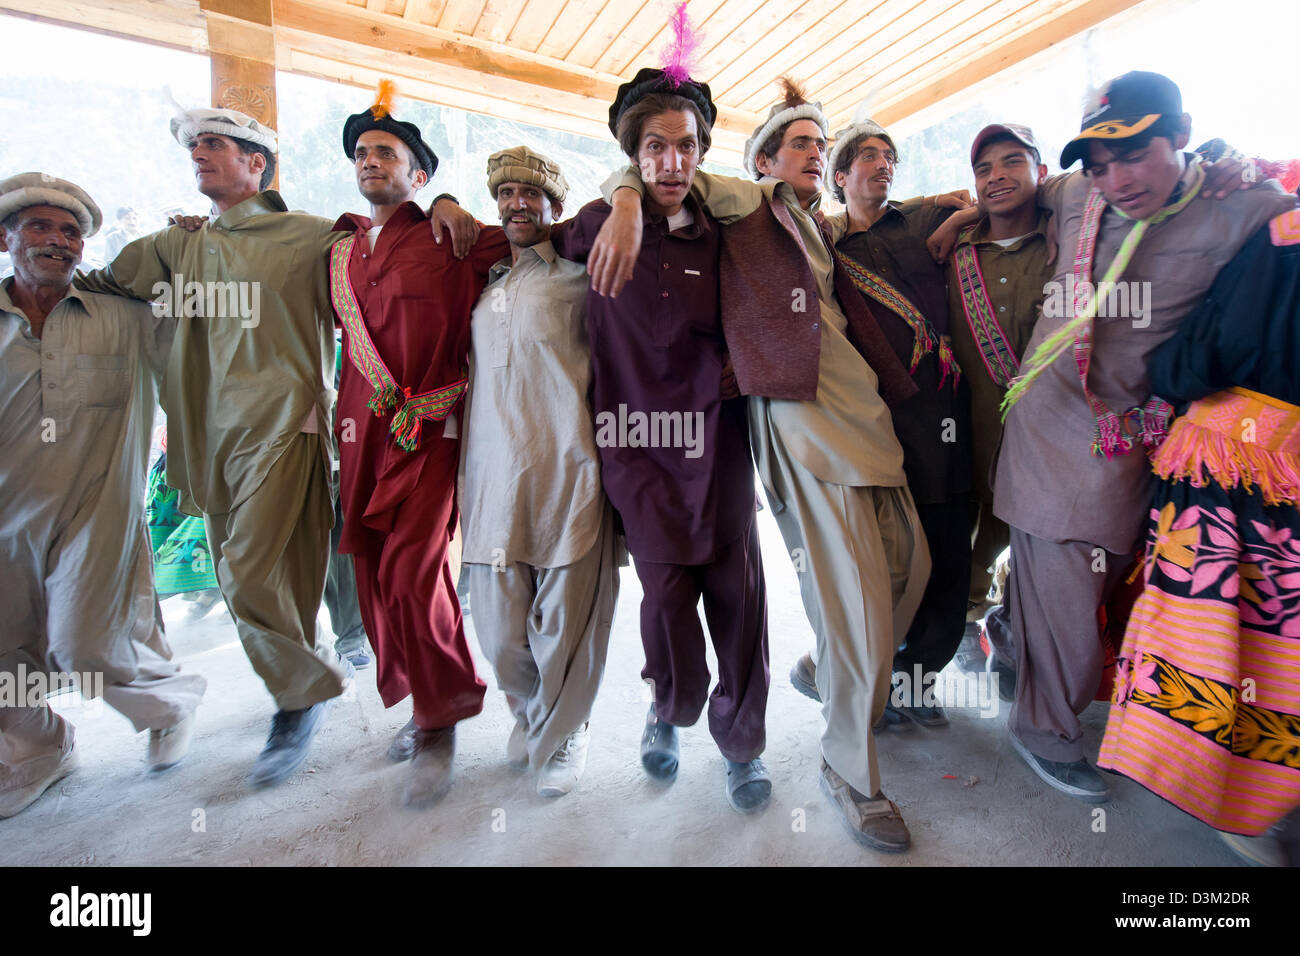 Kalash men dancing in a line at the Kalash Joshi (Spring Festival), Grum Village Charso (dancing ground), Rumbur Valley, Chitral, Khyber-Pakhtunkhwa, Pakistan Stock Photo